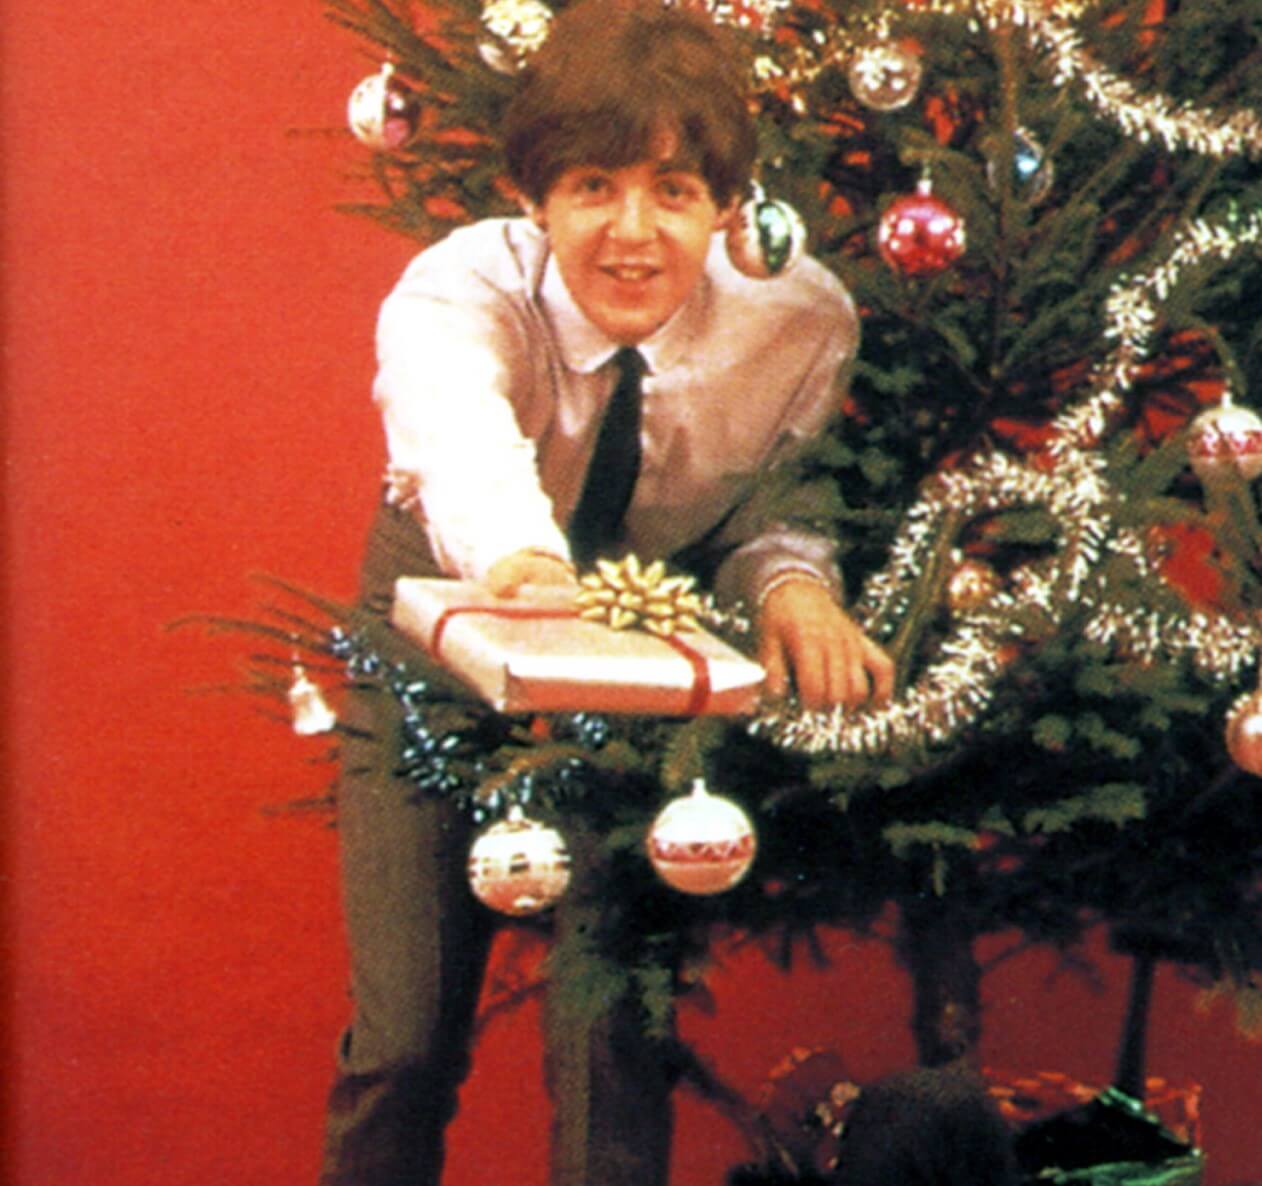 "Wonderful Christmastime" singer Paul McCartney near a tree